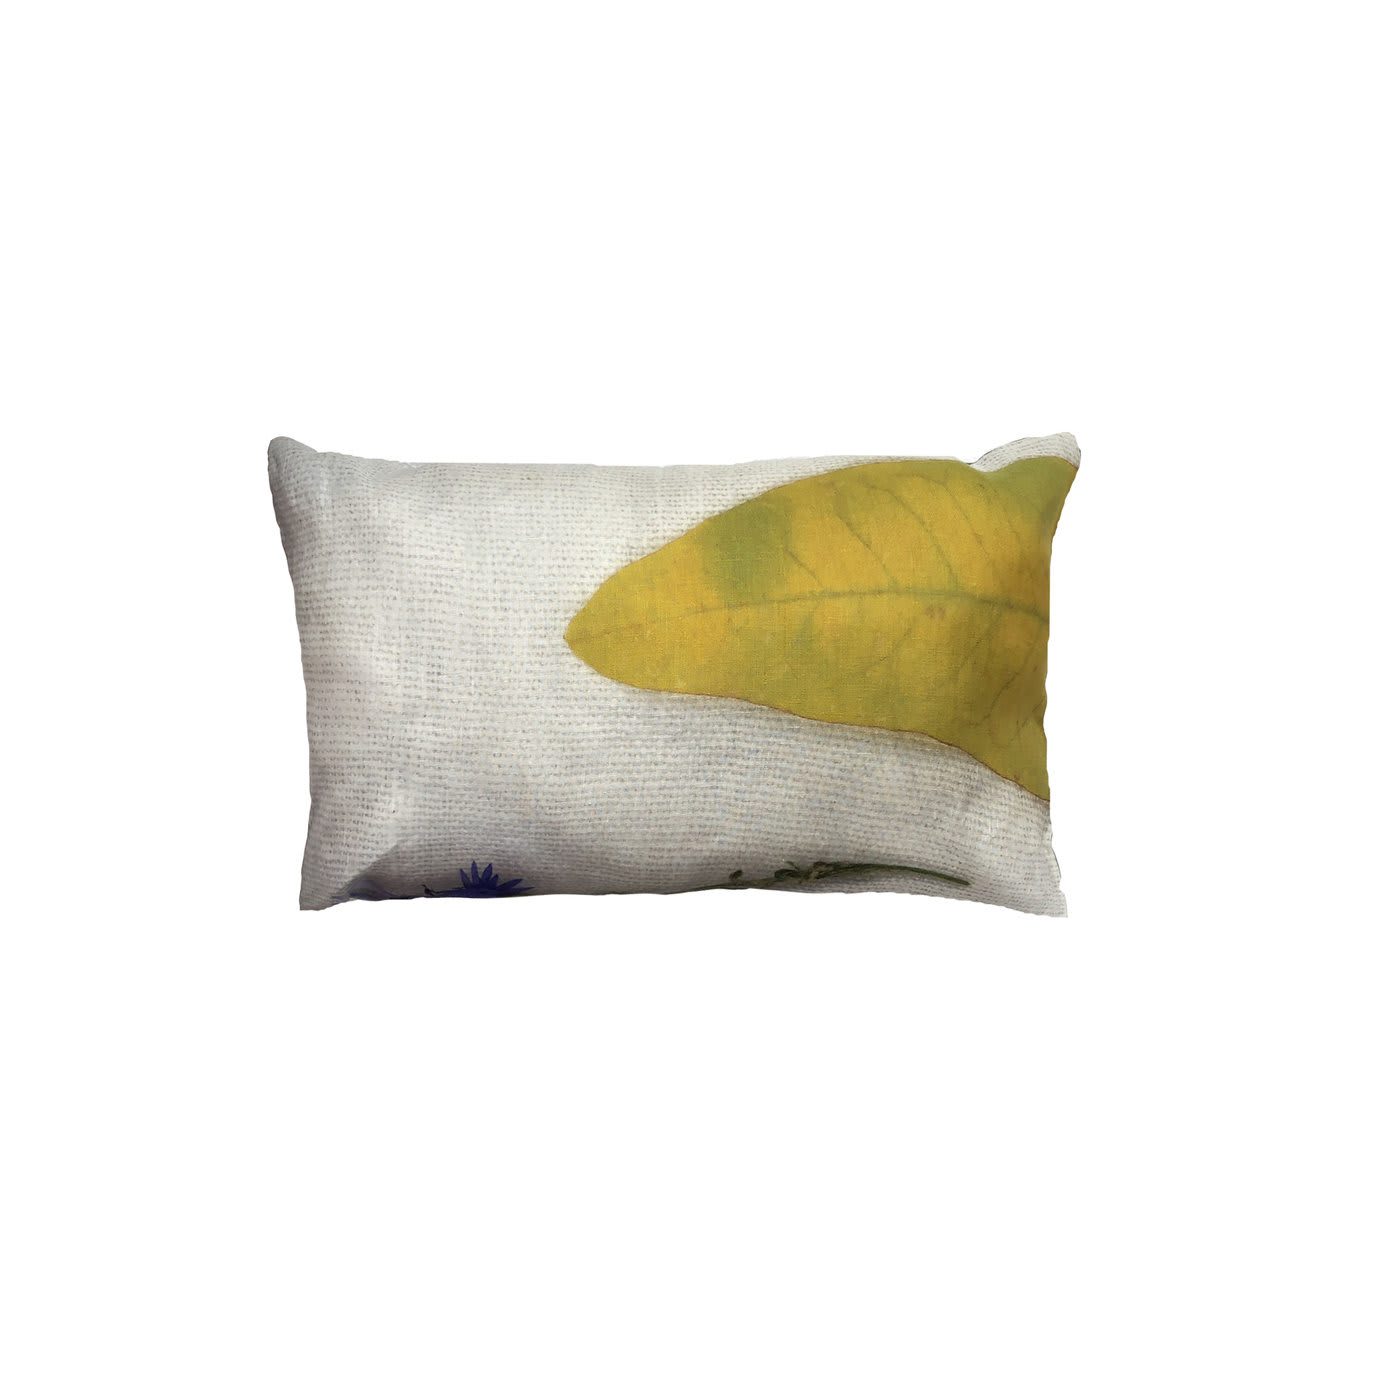 Natura White Linen Cushion with Yellow Leaf - Colomba Leddi